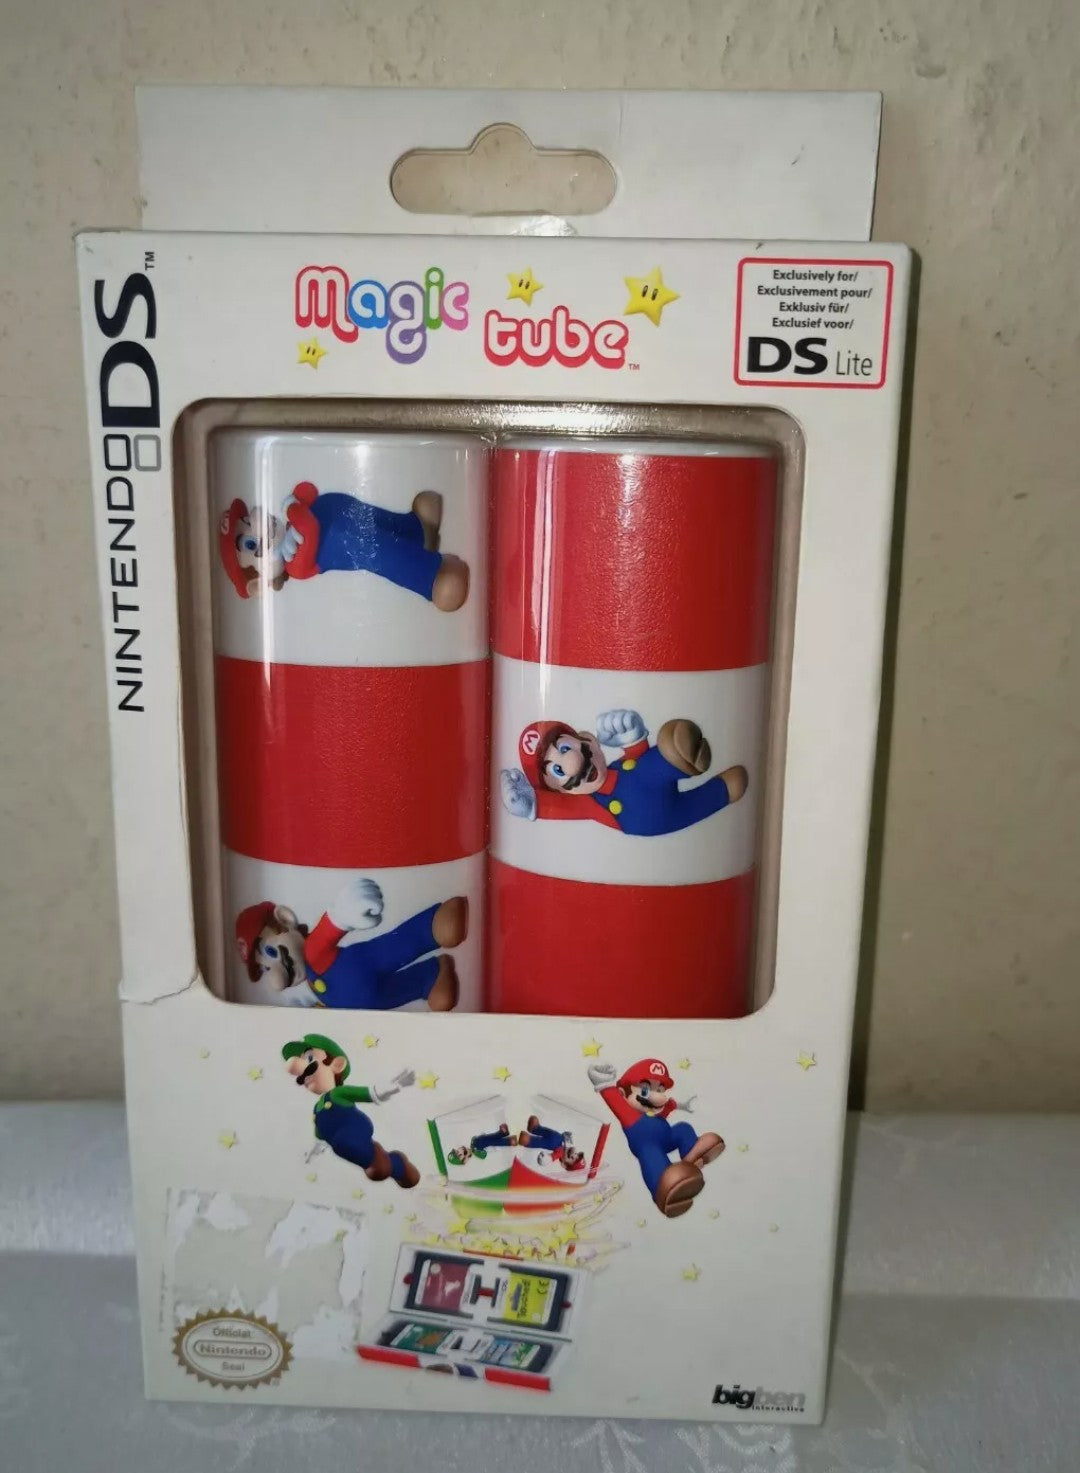 Magic Tube brings Mario Bros Nintendo Ds and Ds Lite games